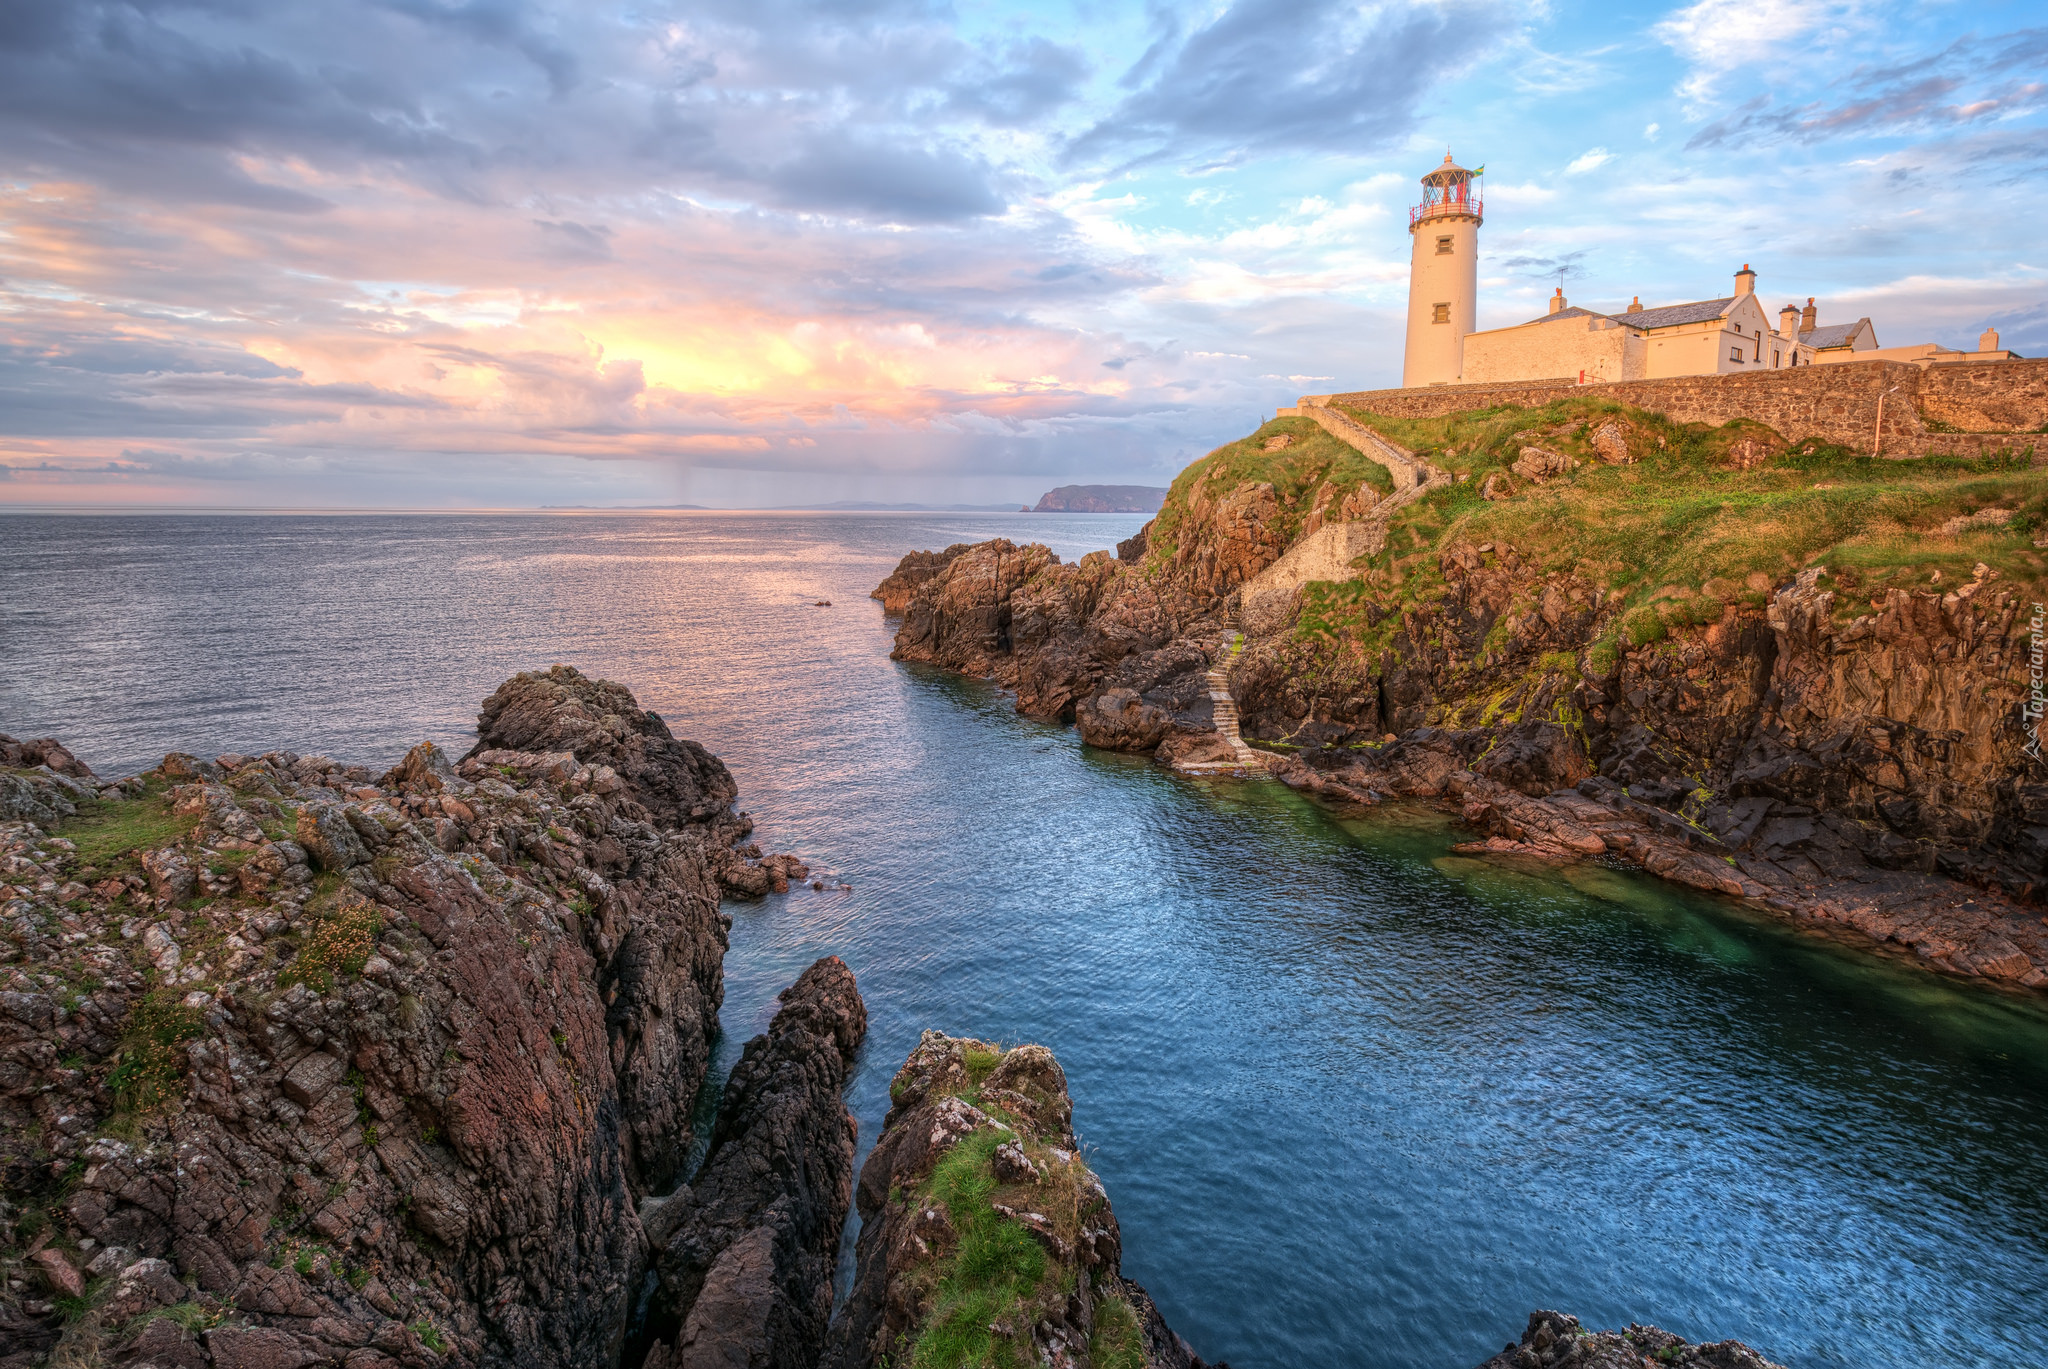 Morze, Latarnia morska Fanad Head Lighthouse, Skały, Wschód słońca, Chmury, Portsalon, Irlandia